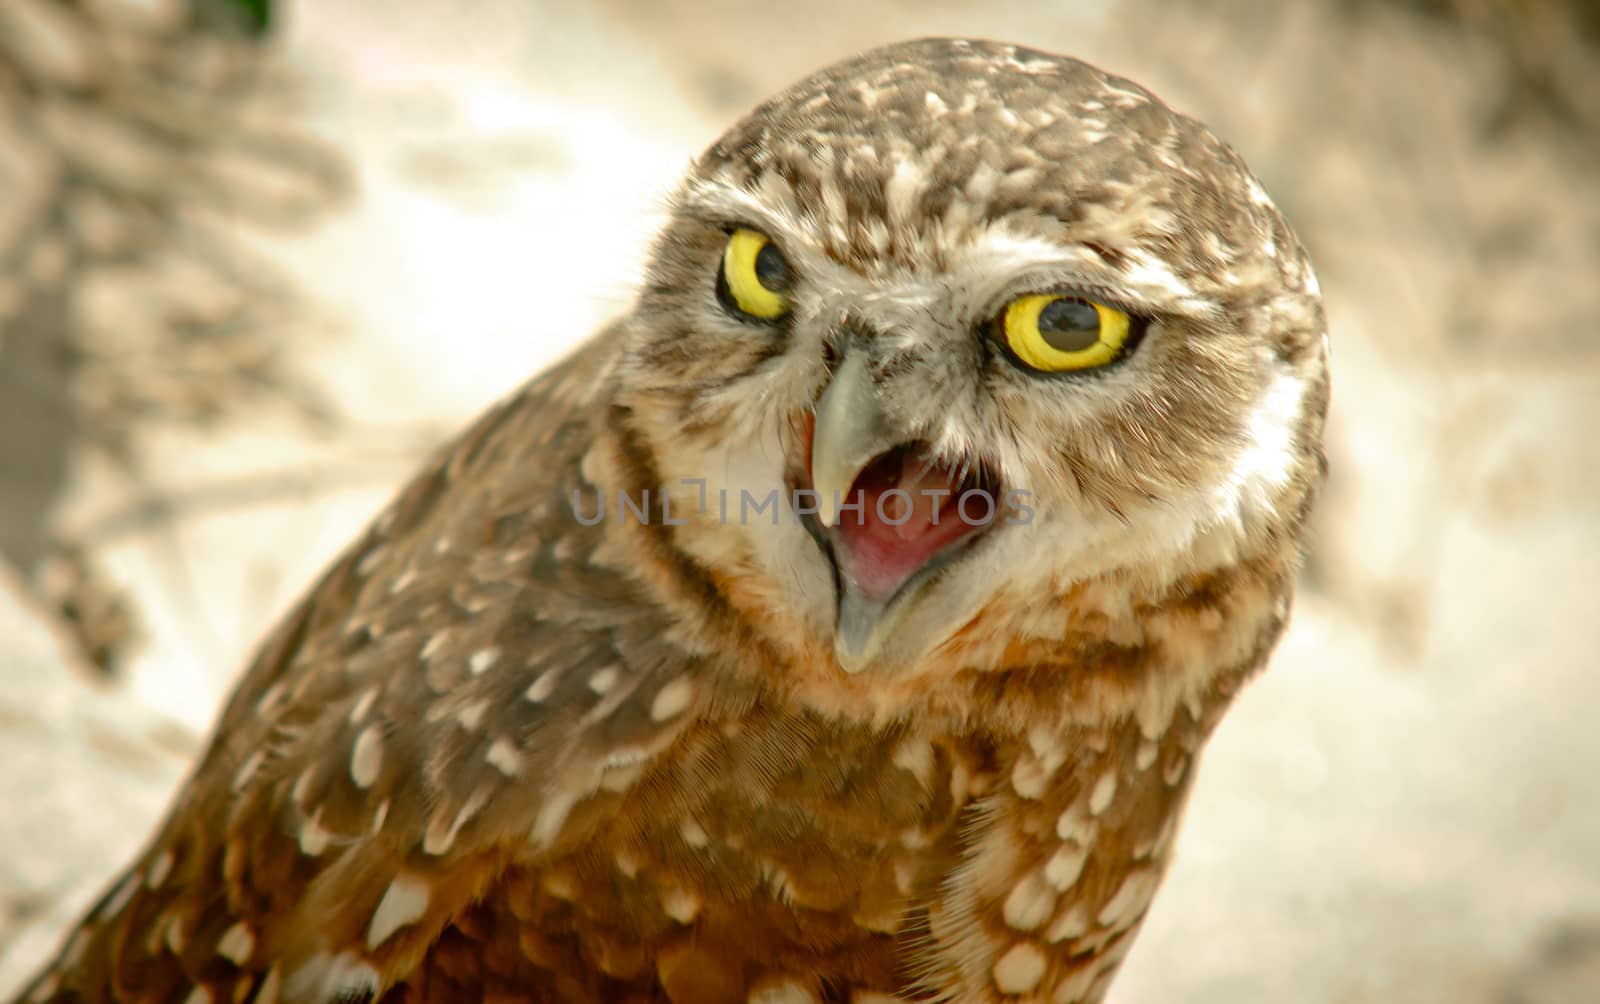 Cry of burrowing owl by gigiobbr